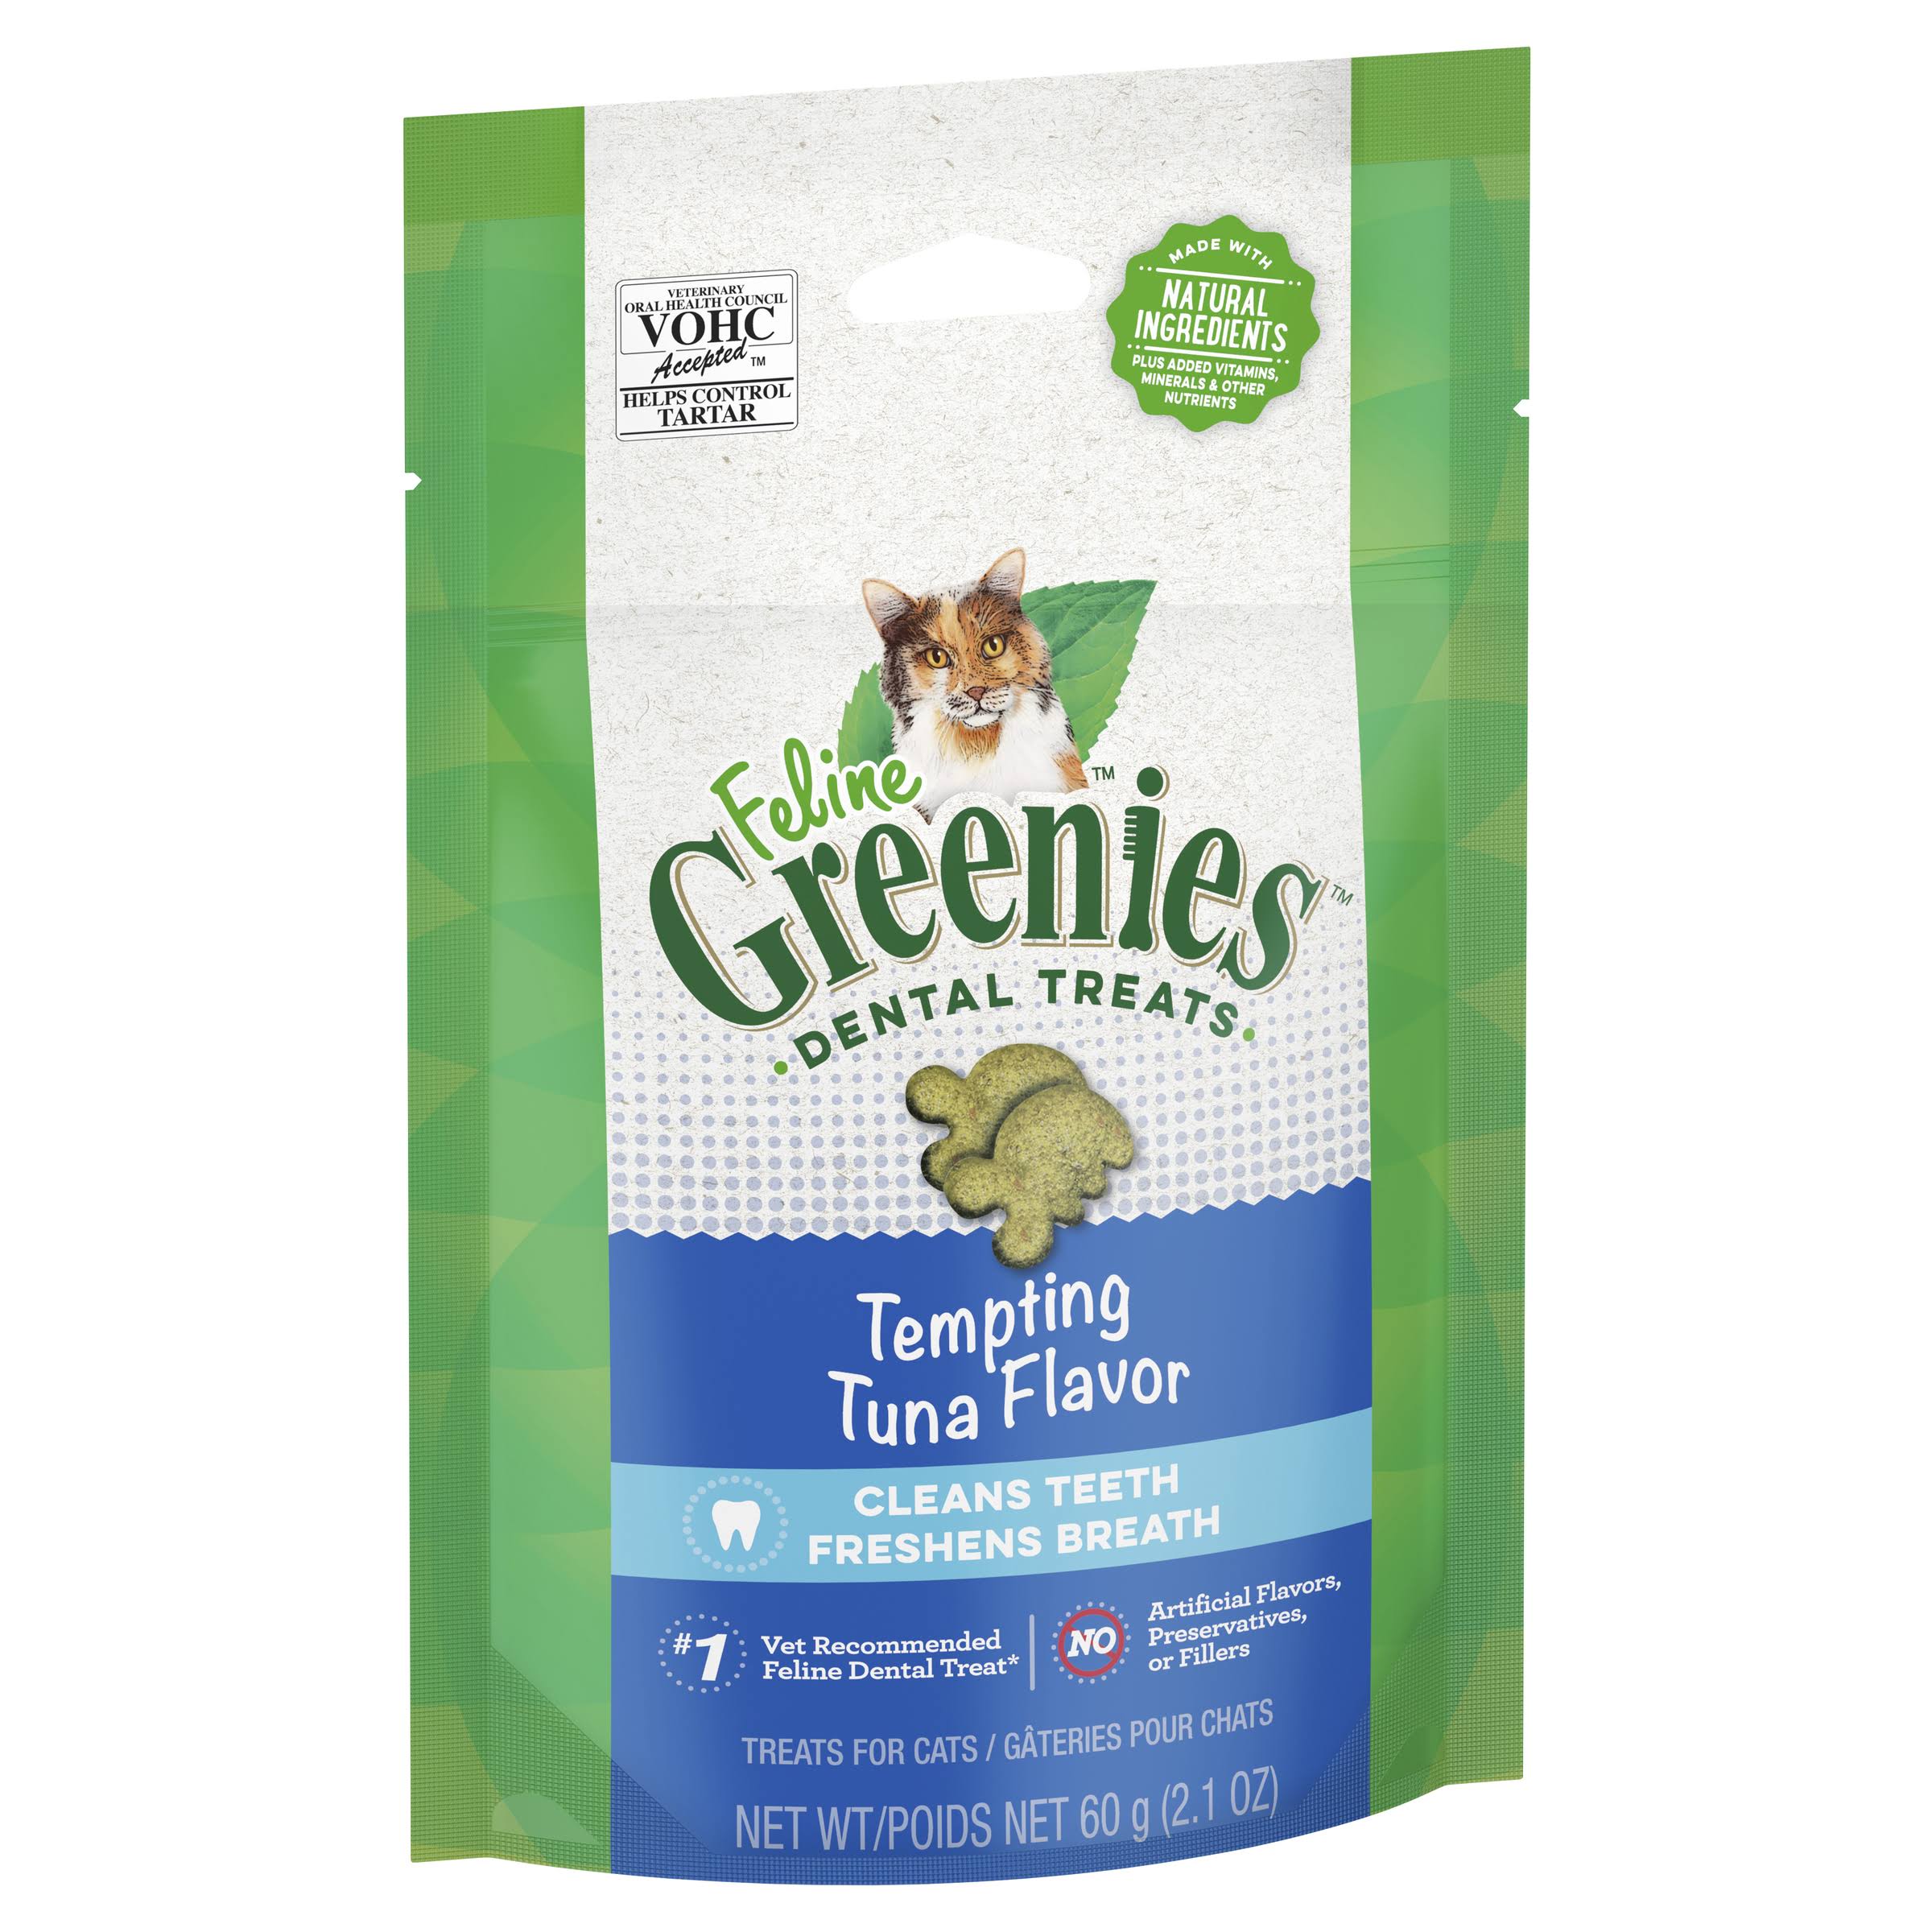 Greenies Feline Dental Treats Tempting Tuna Flavor, 2.1 oz (Pack of 1)